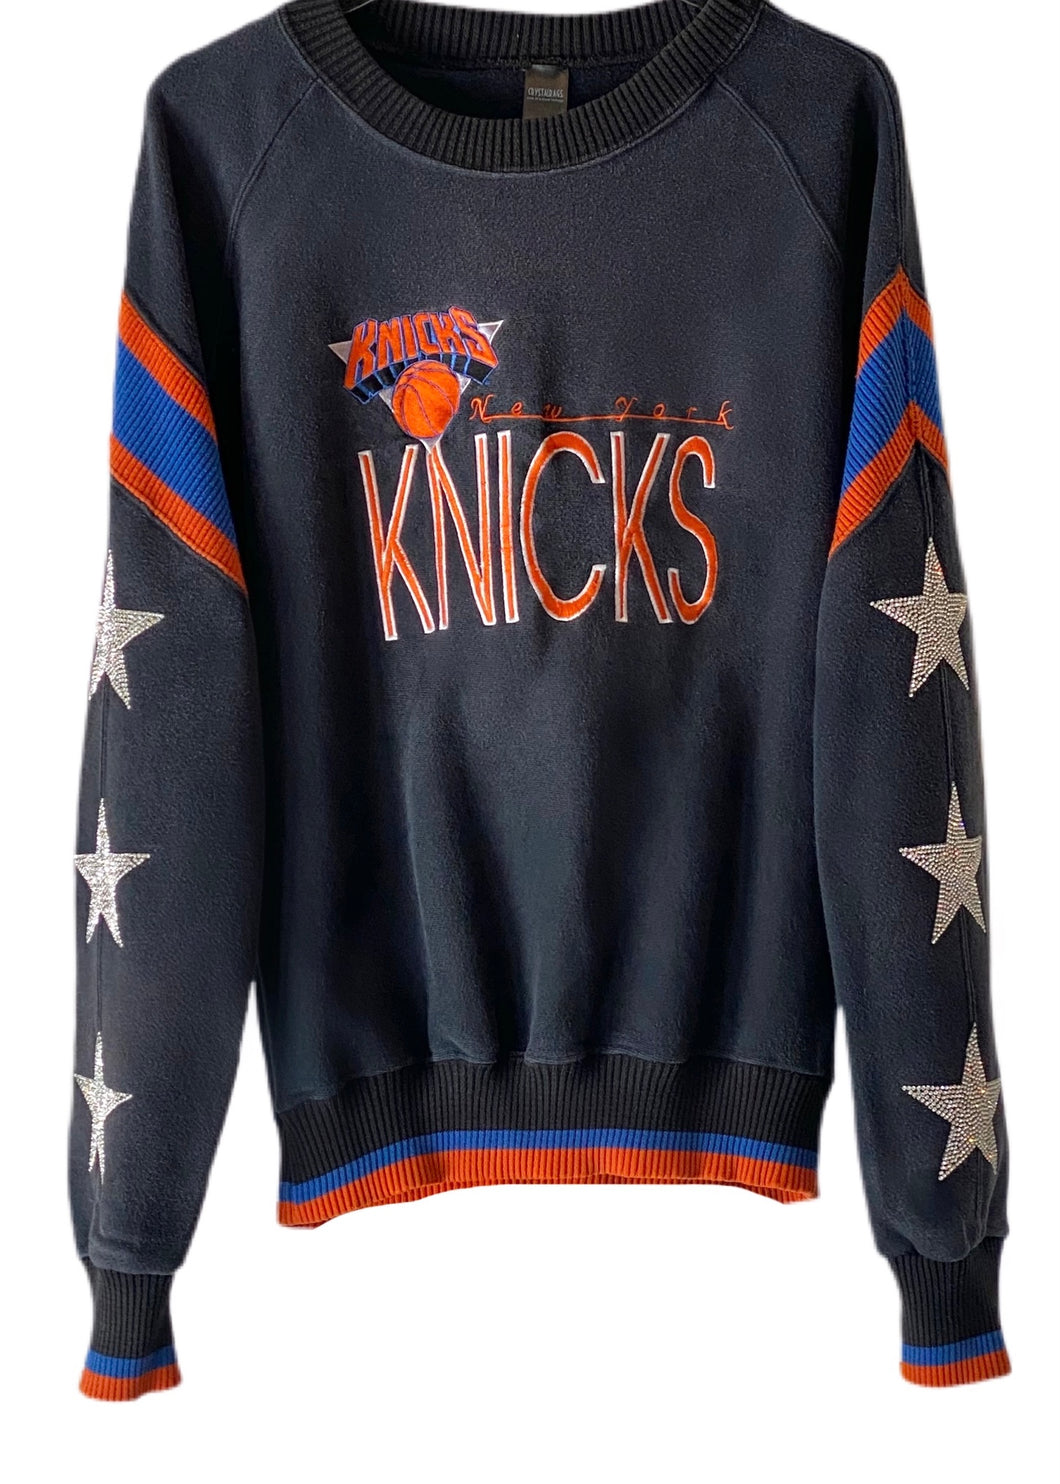 NY Knicks, NBA One of a KIND Vintage Sweatshirt with Three Crystal Star Design